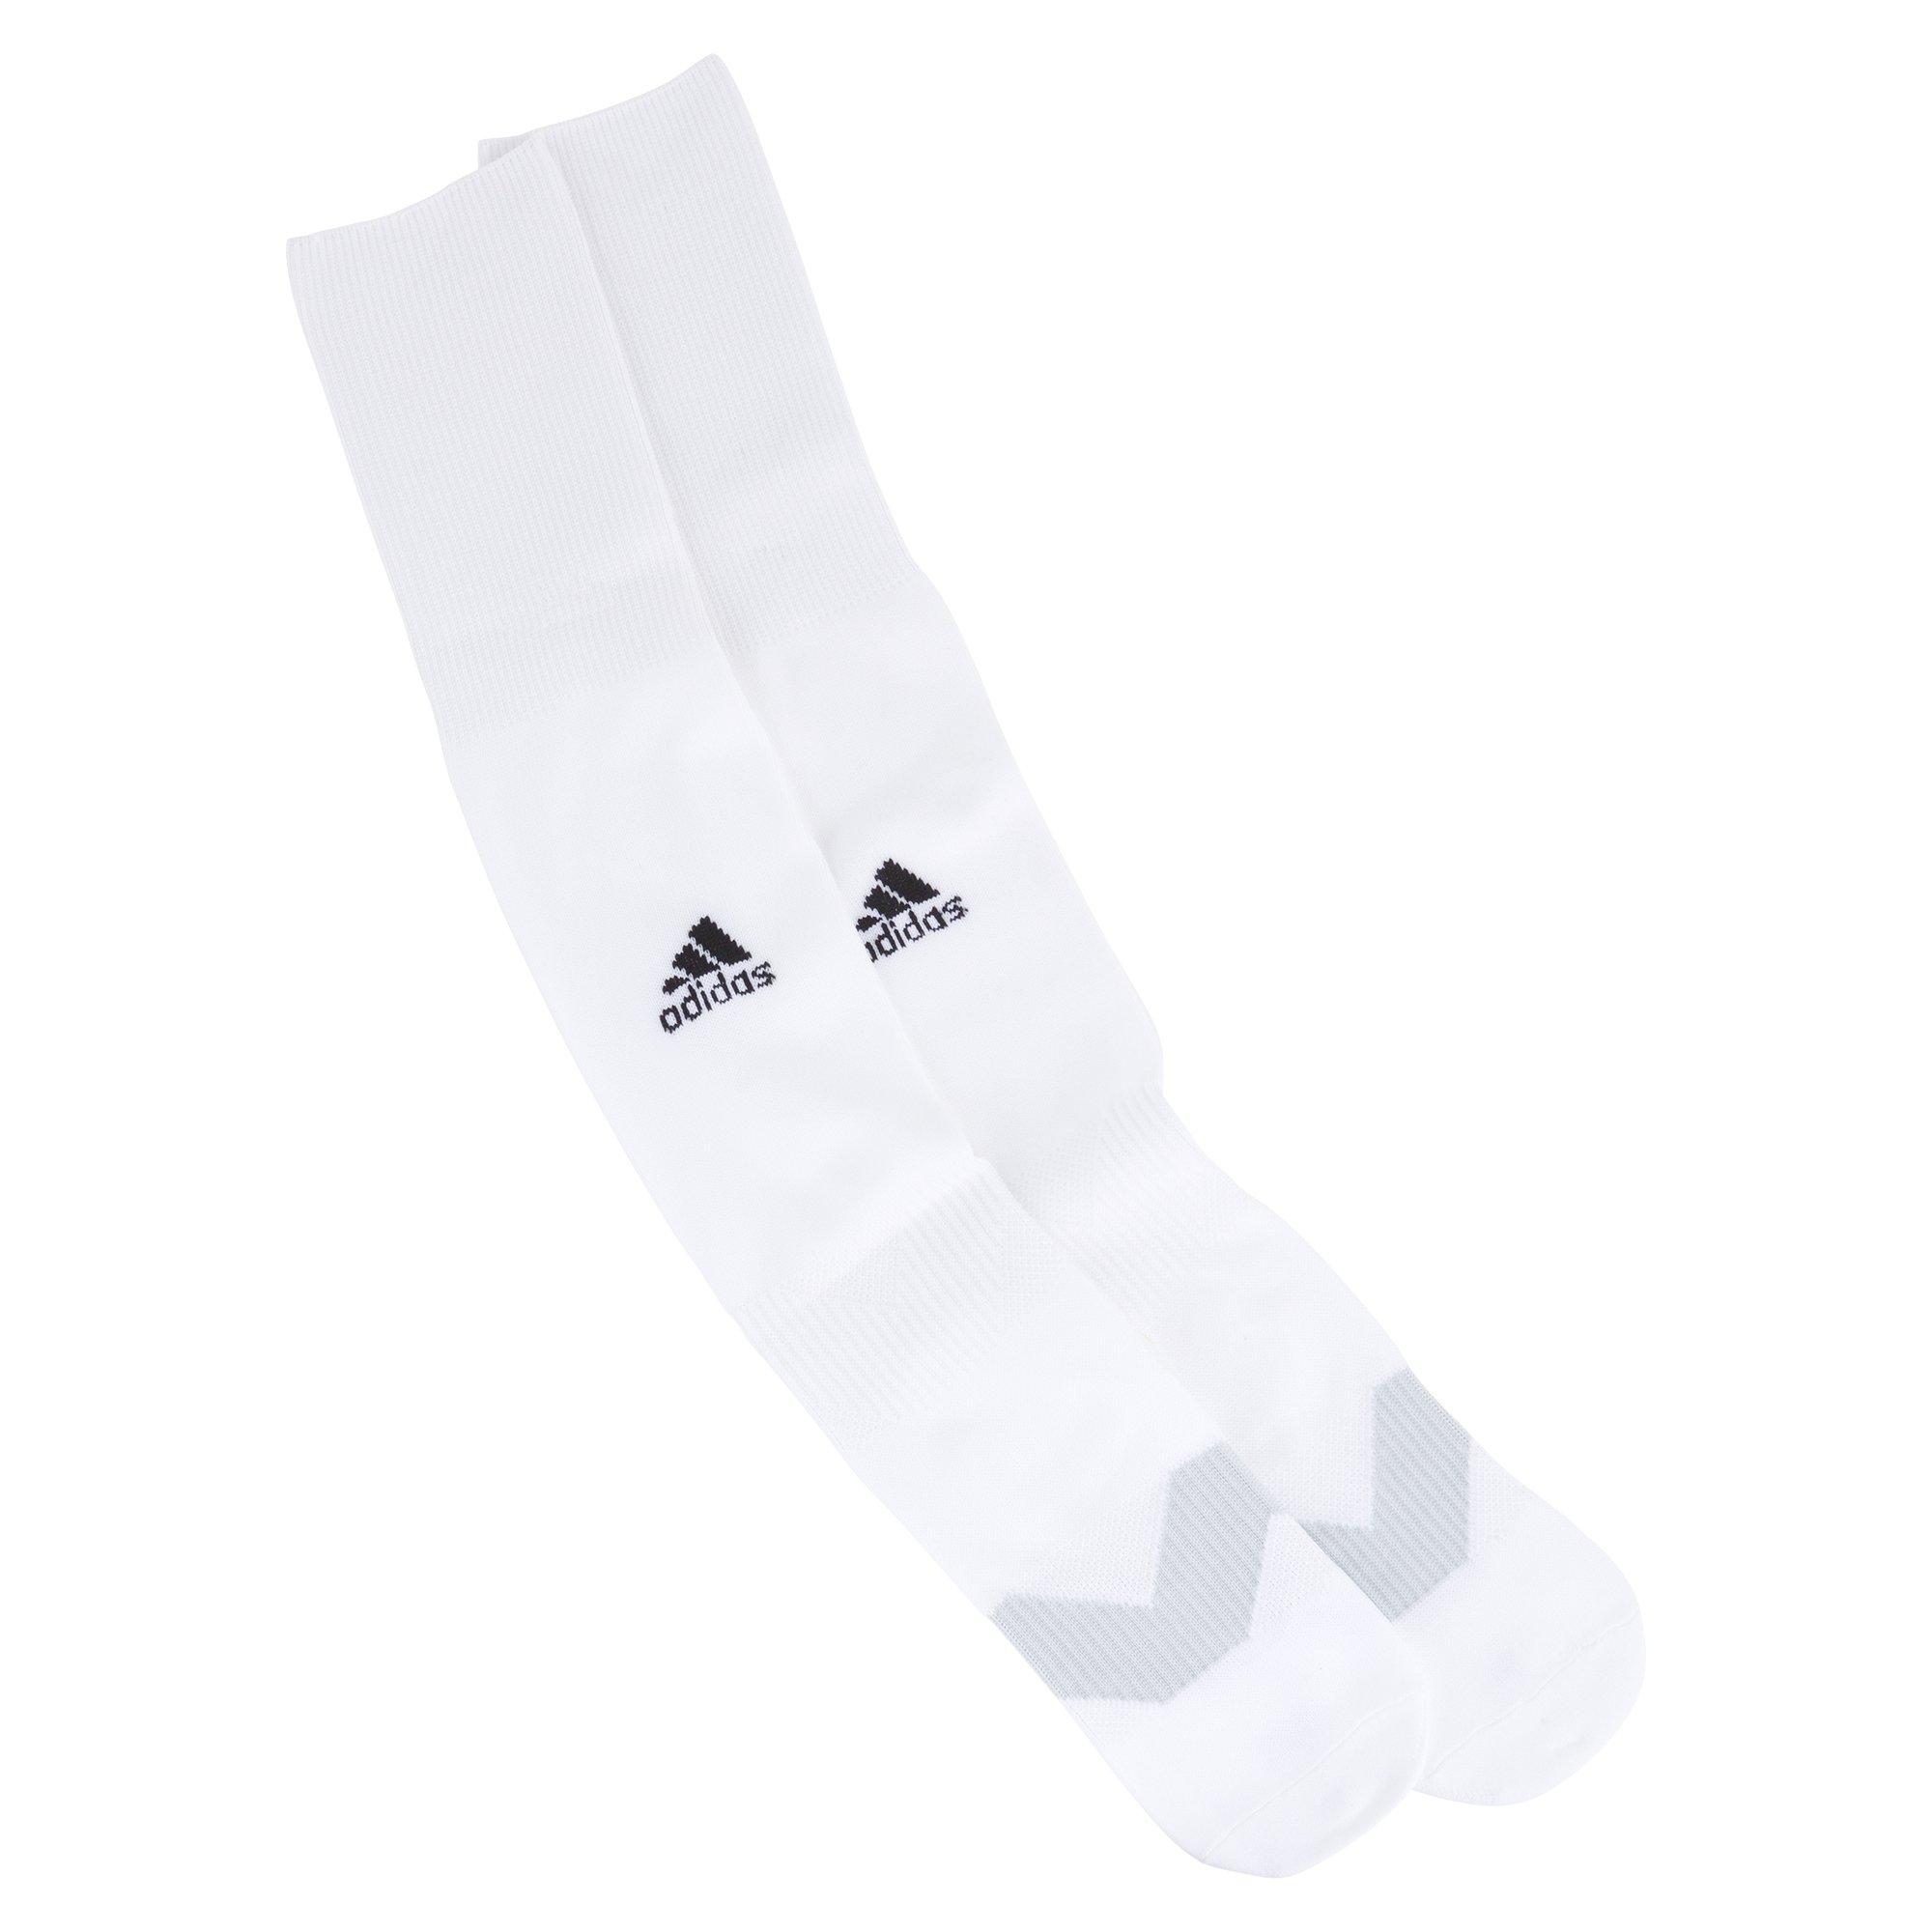 adidas metro iv soccer socks